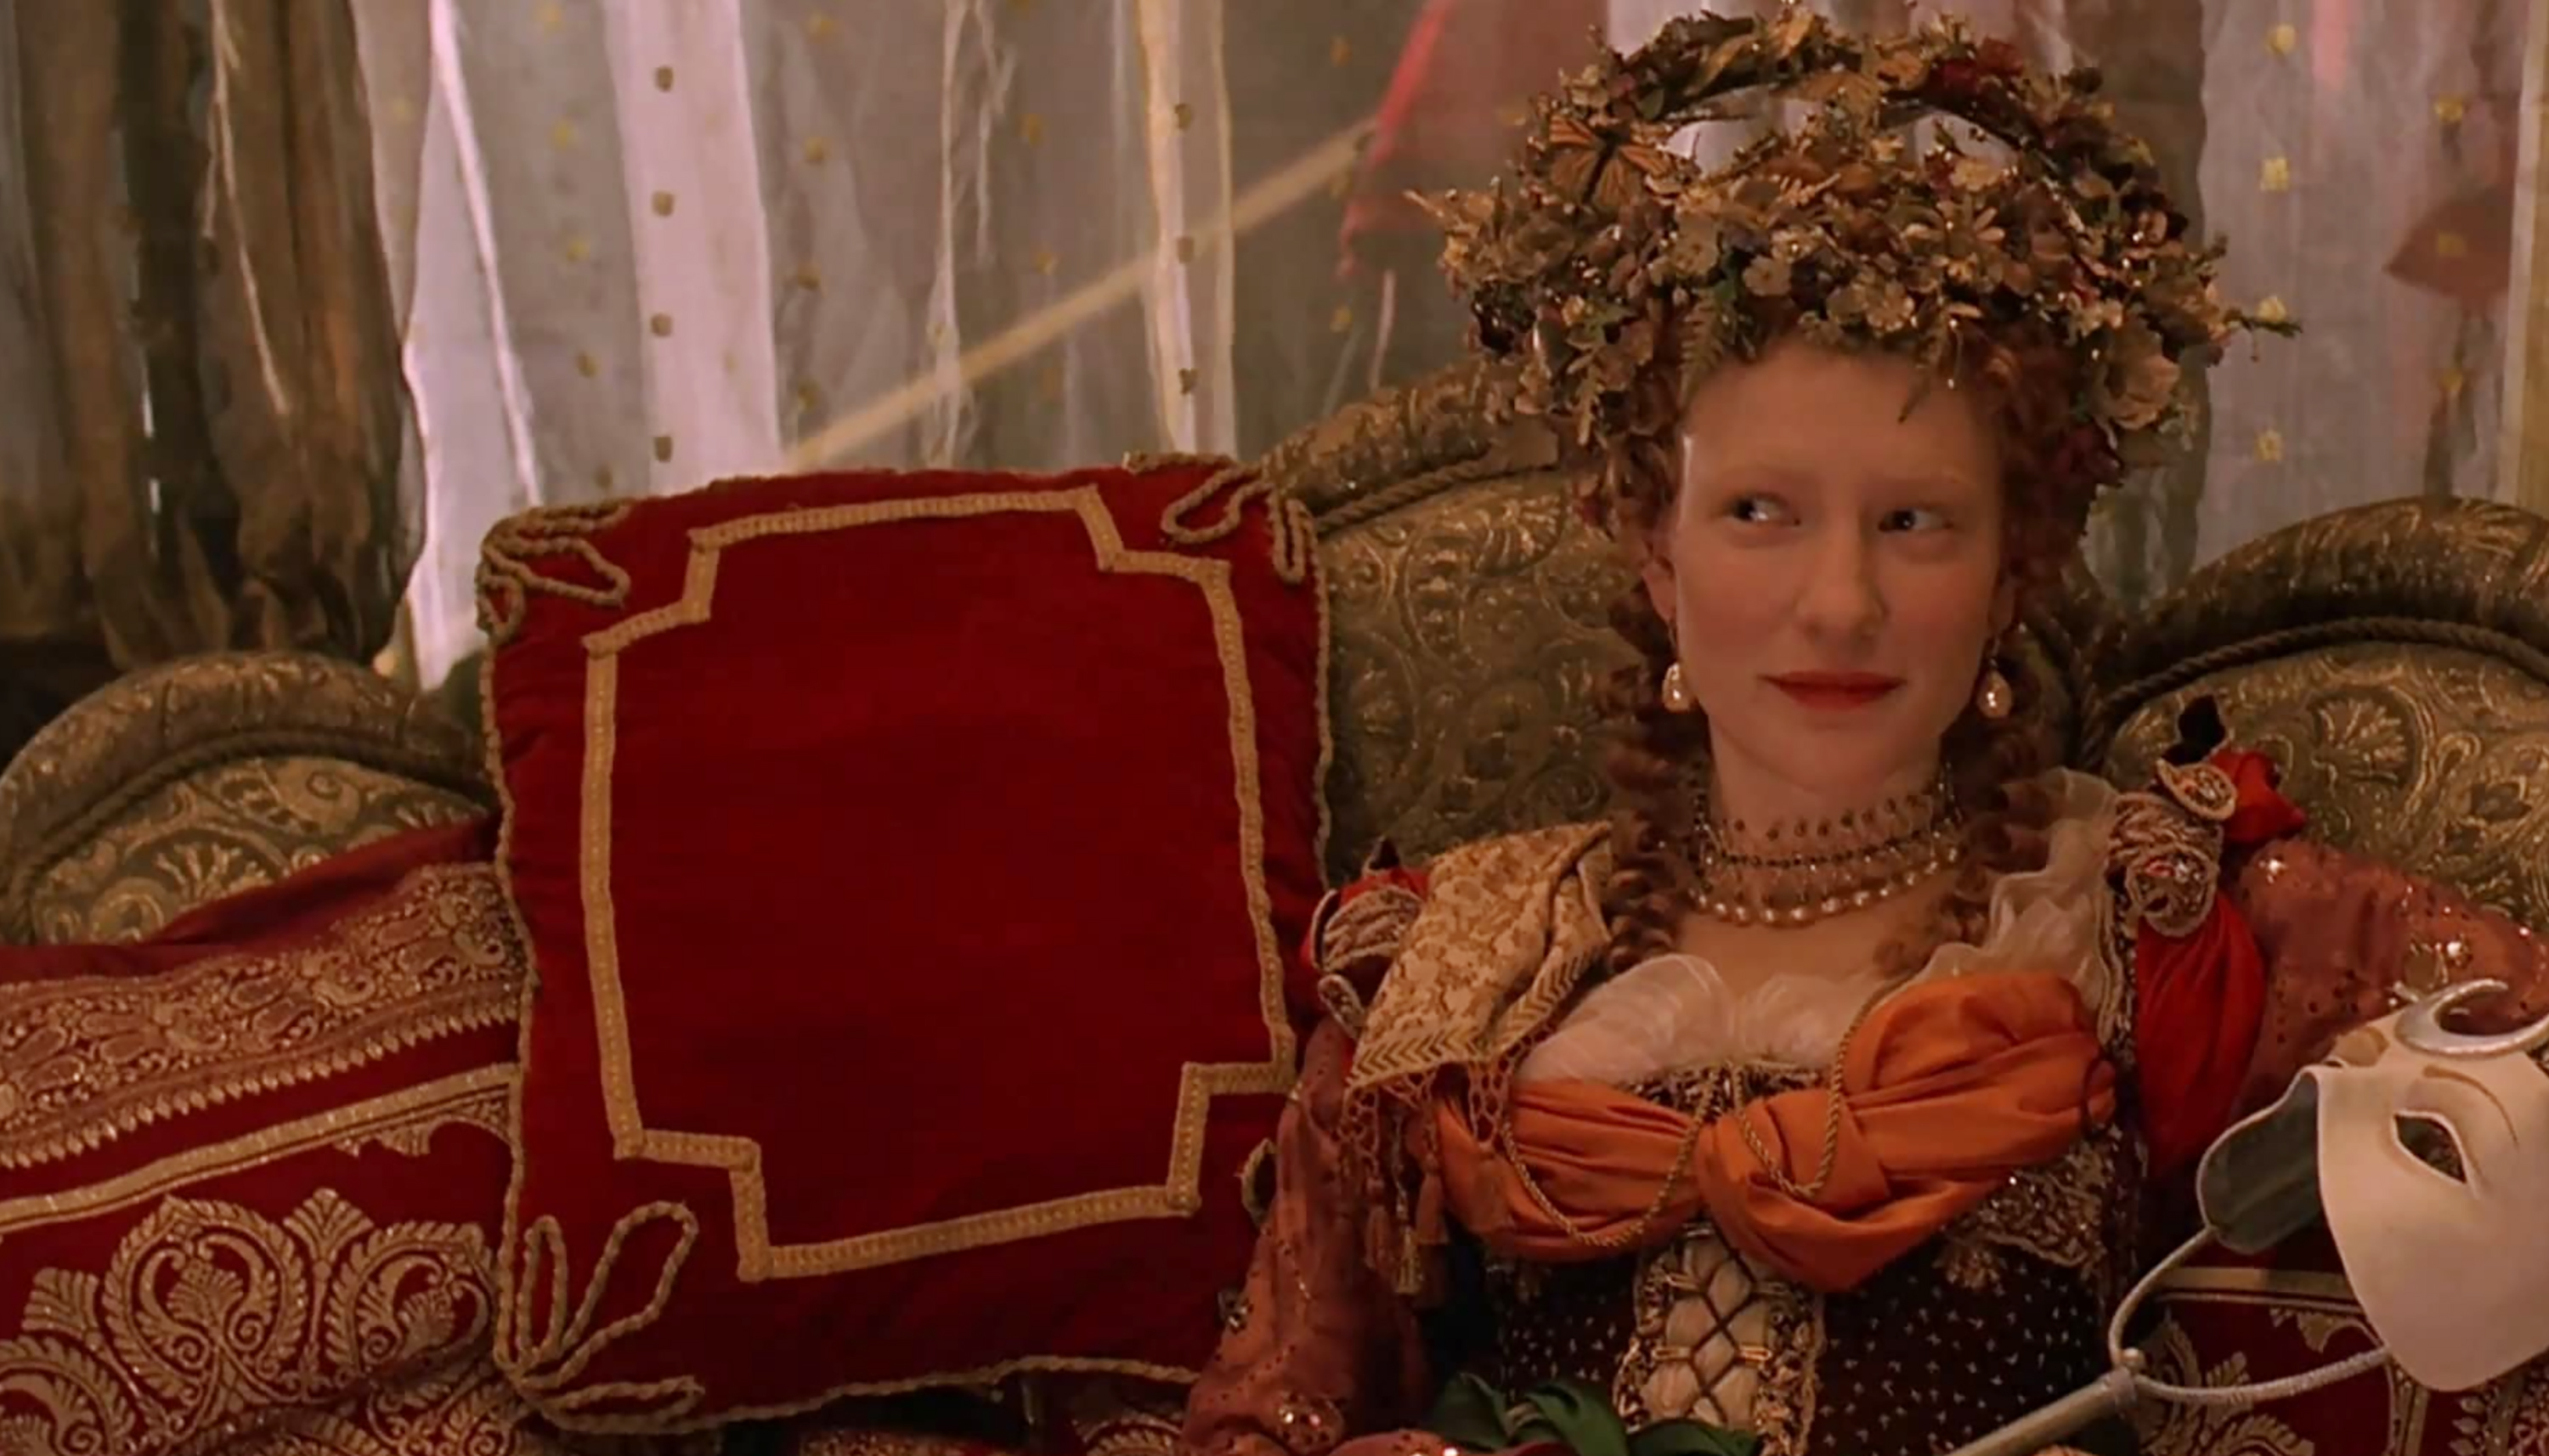 Cate Blanchett in "Elizabeth" (1998)